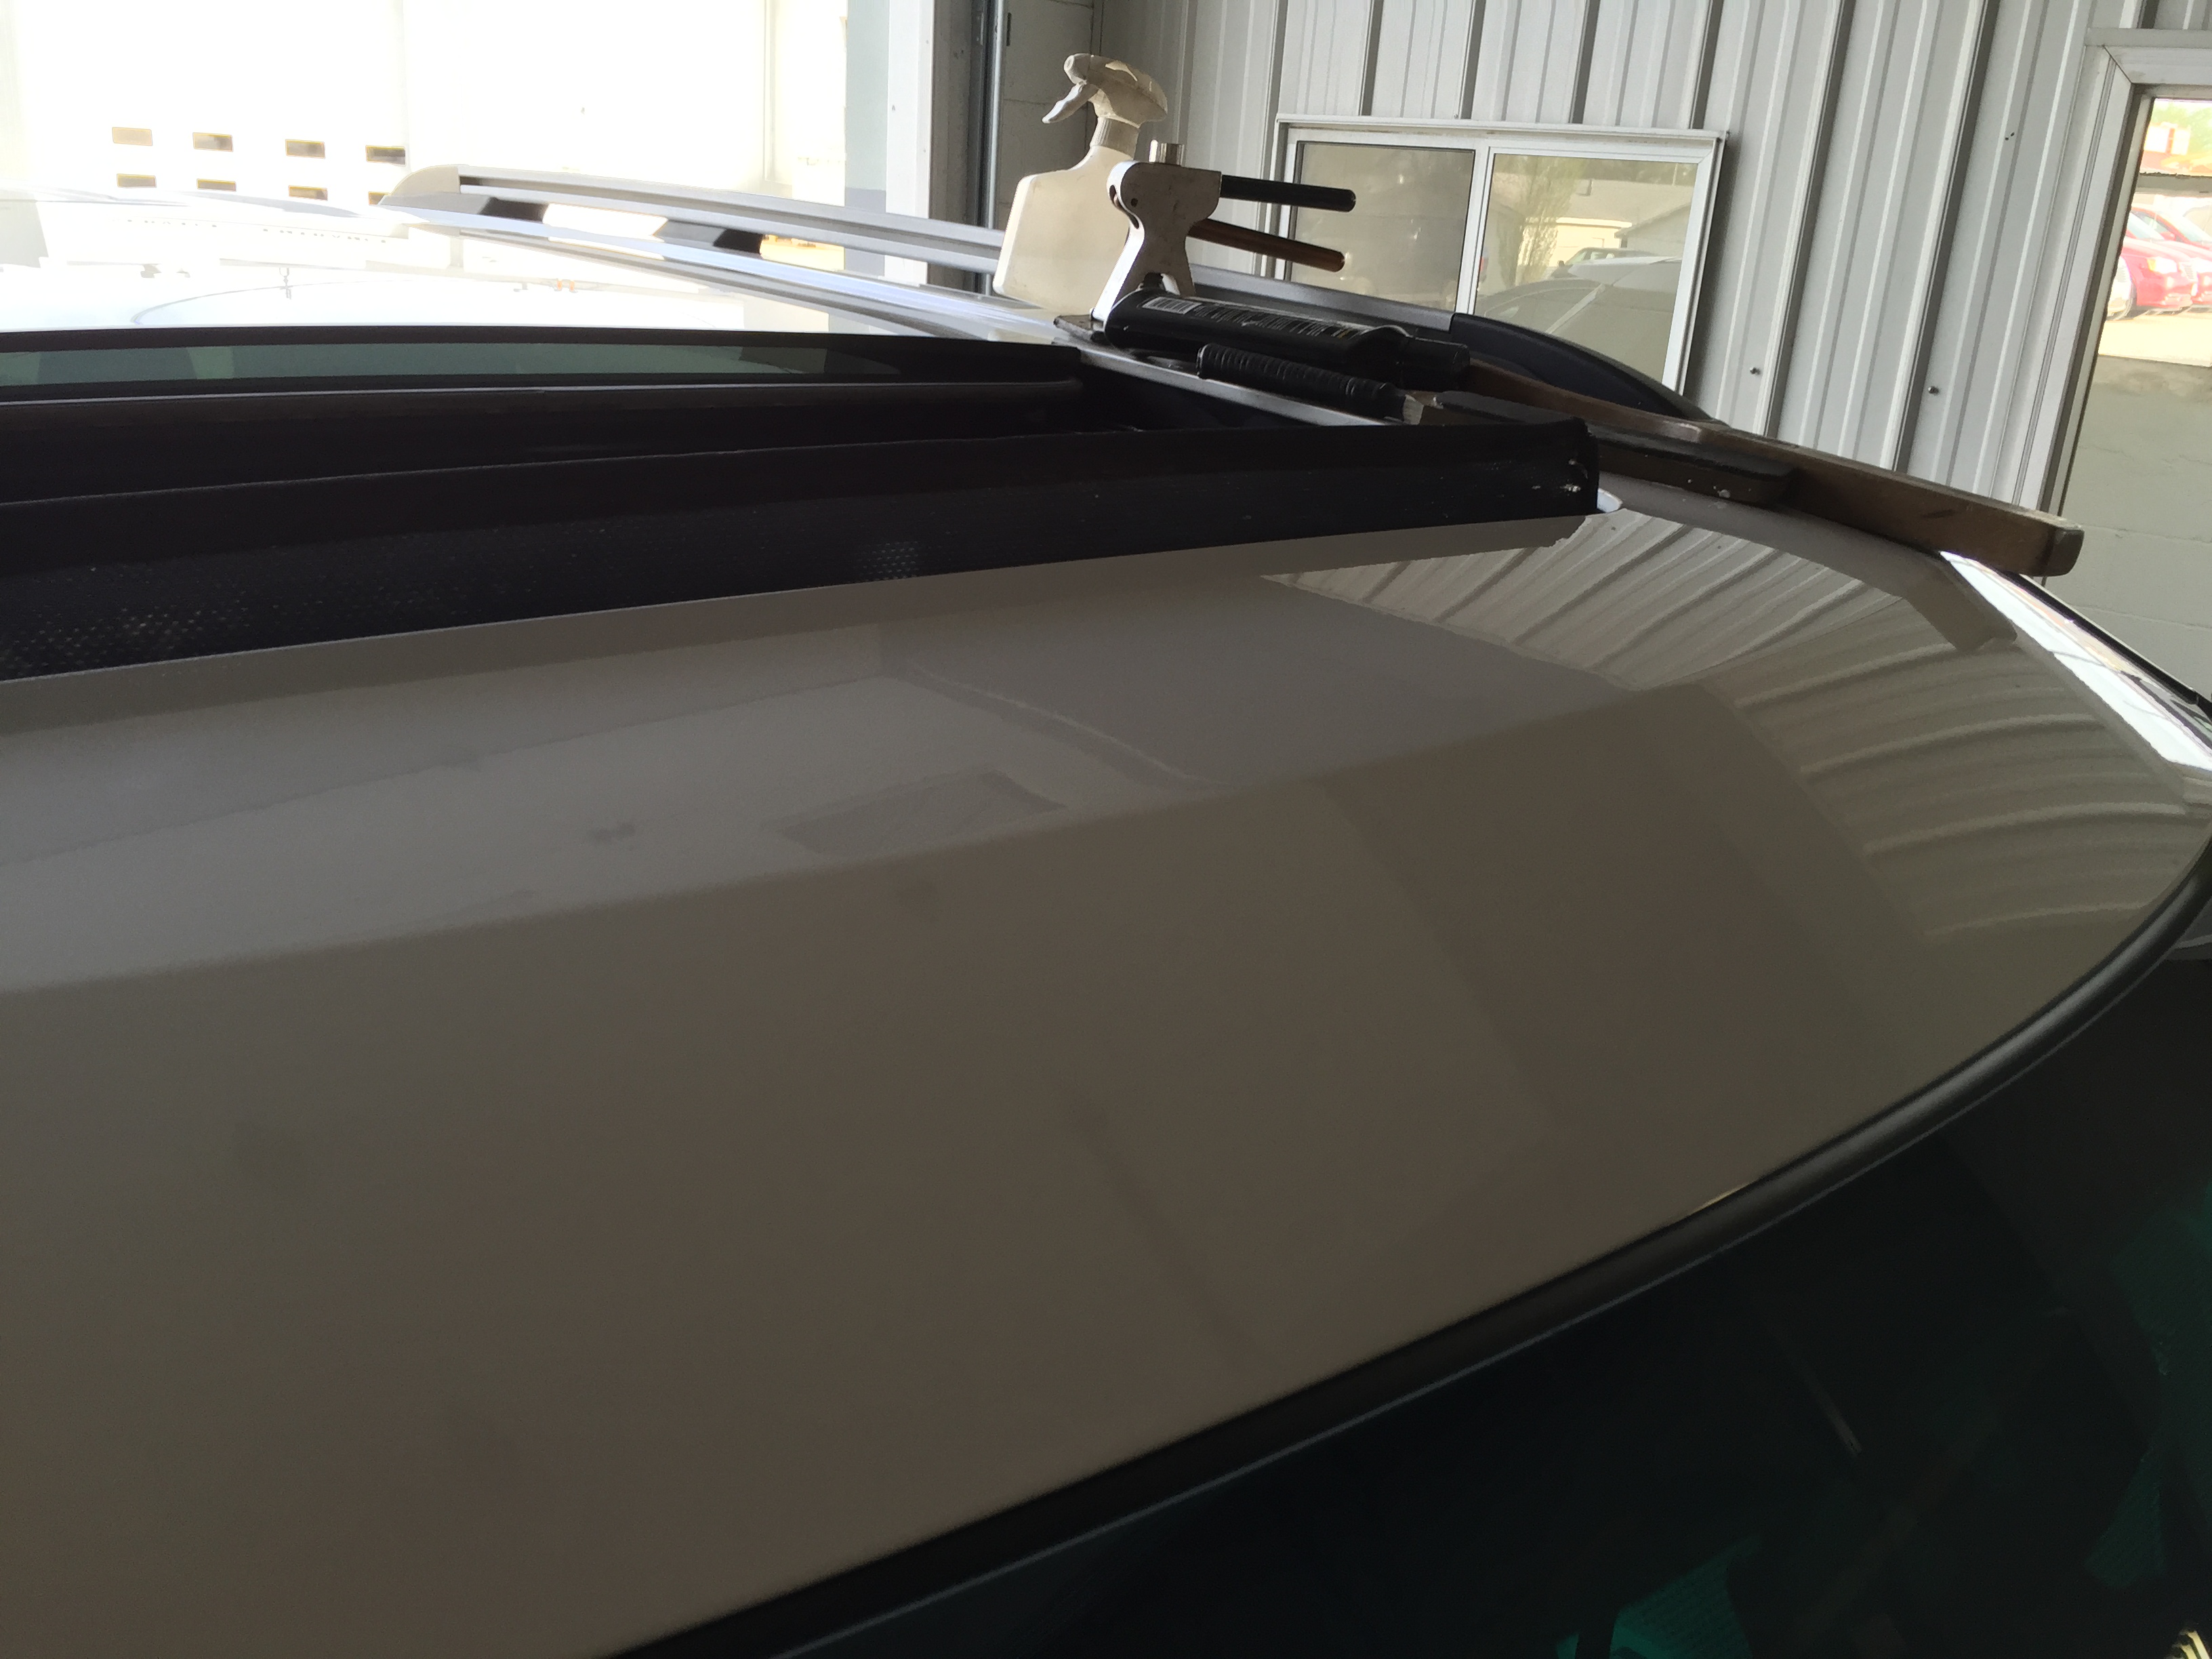 2014 Ford Explorer XLT Tri Coat White, Paintless Dent Repair Roof Dents, Mobile Dent Repair. , Springfield IL, Pana IL Taylorville IL